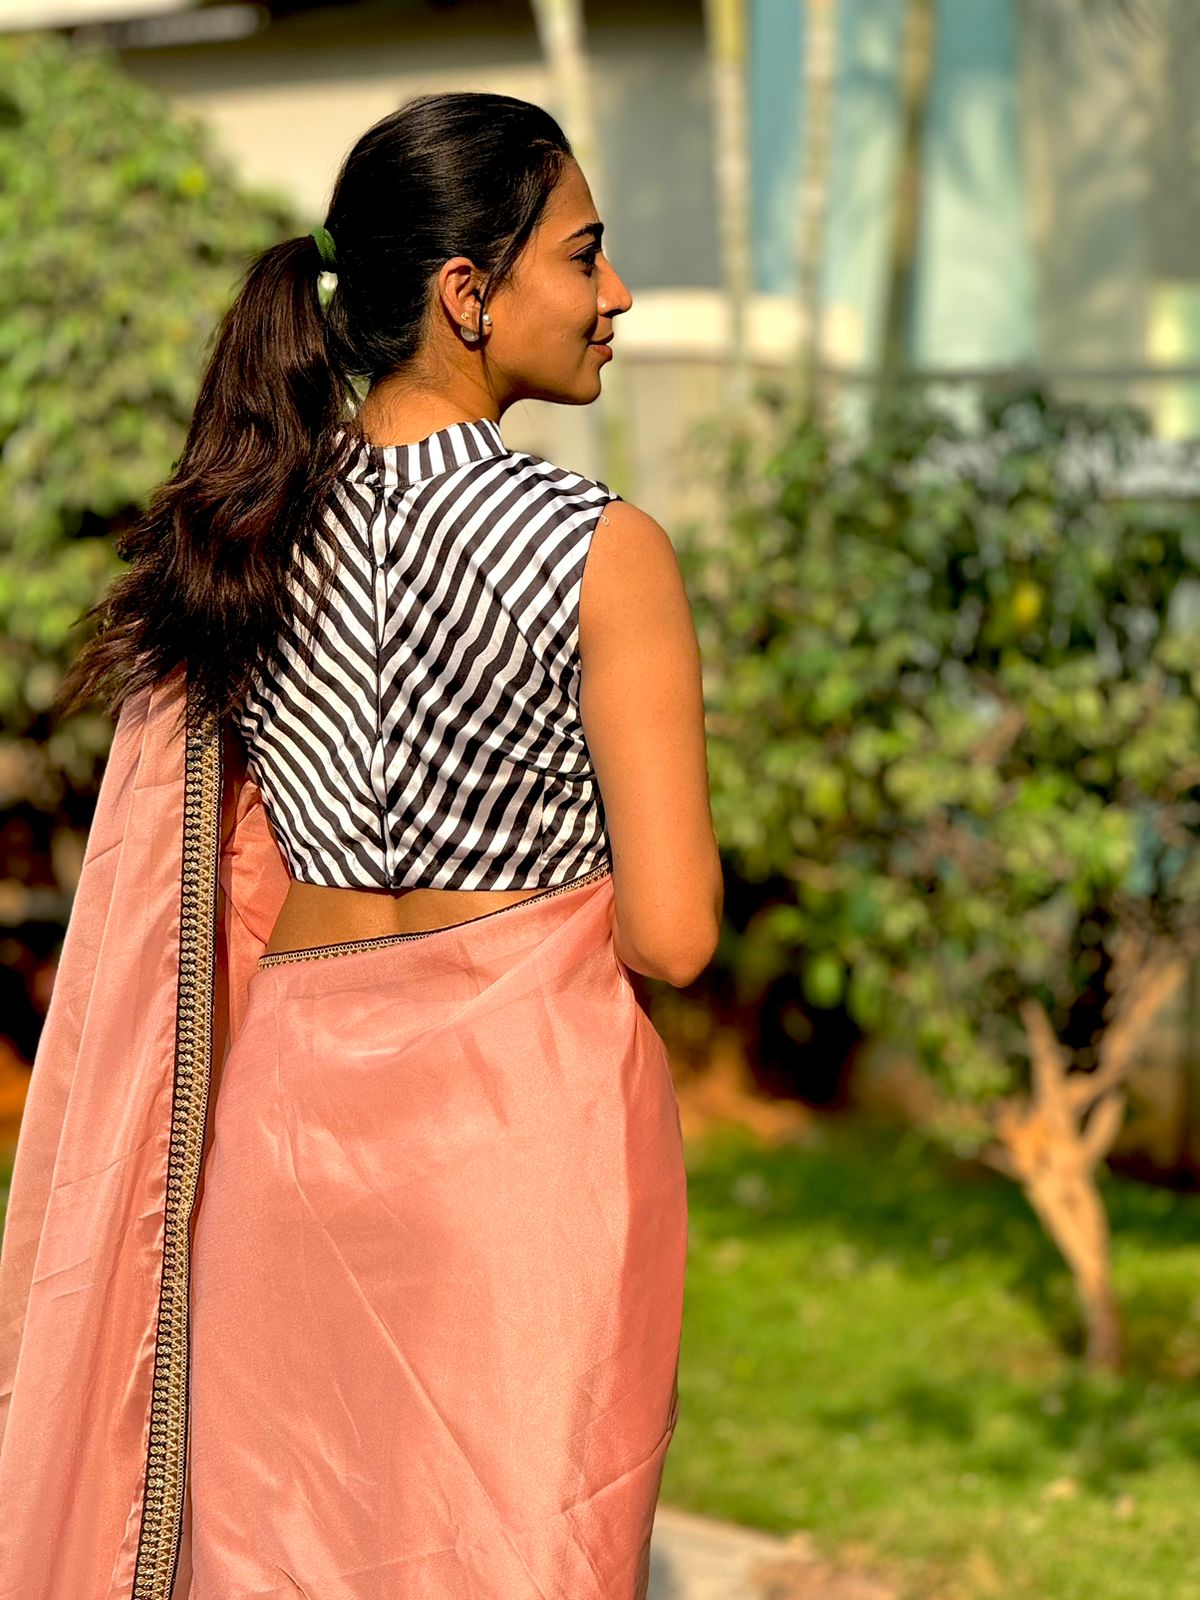 Peach organza saree with satin blouse